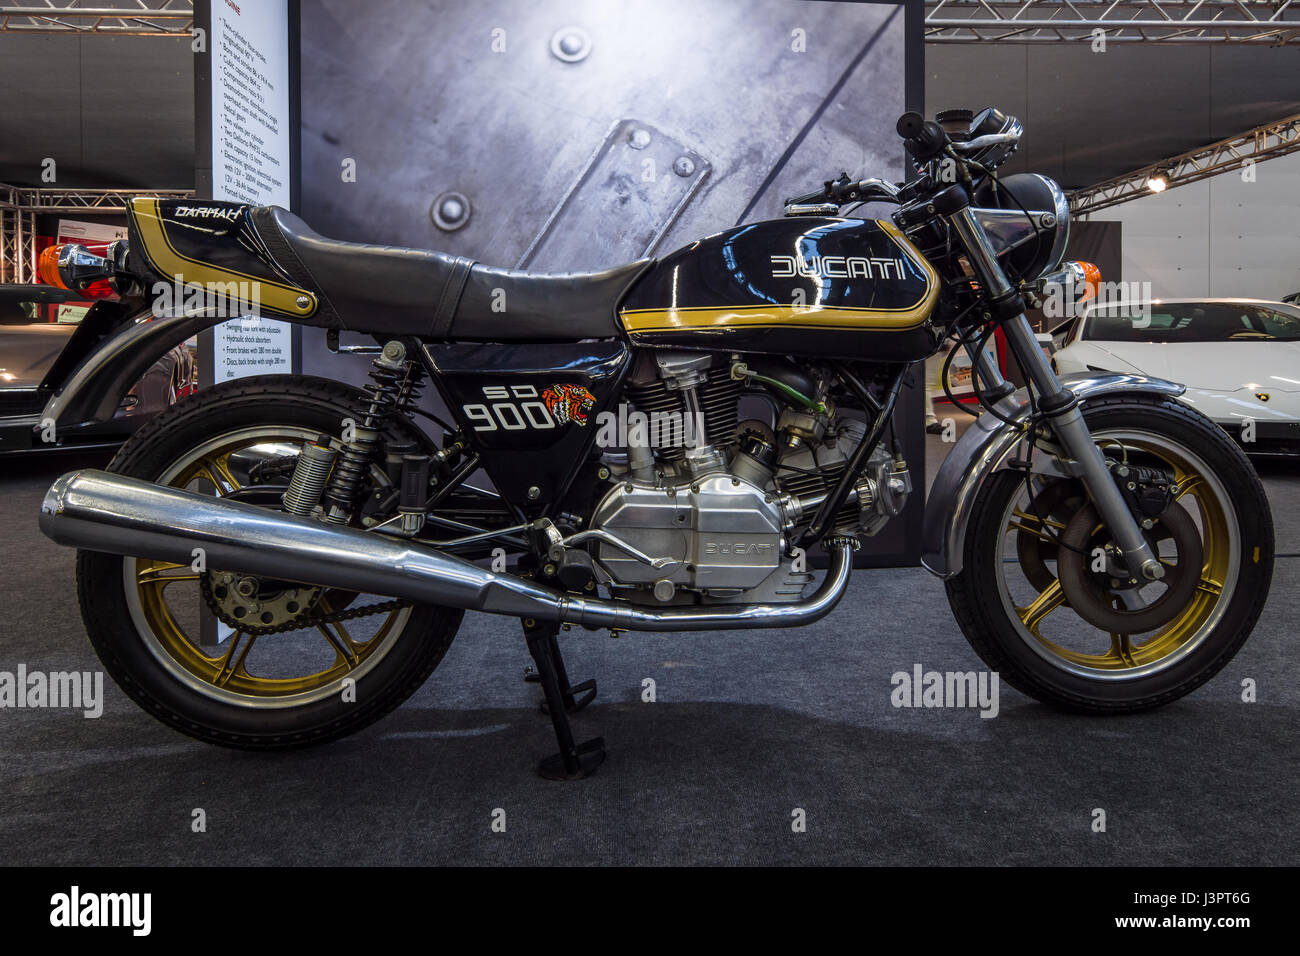 STUTTGART, GERMANY - MARCH 03, 2017: Motorcycle Ducati SD900 Darmah, 1979. Europe's greatest classic car exhibition 'RETRO CLASSICS' Stock Photo